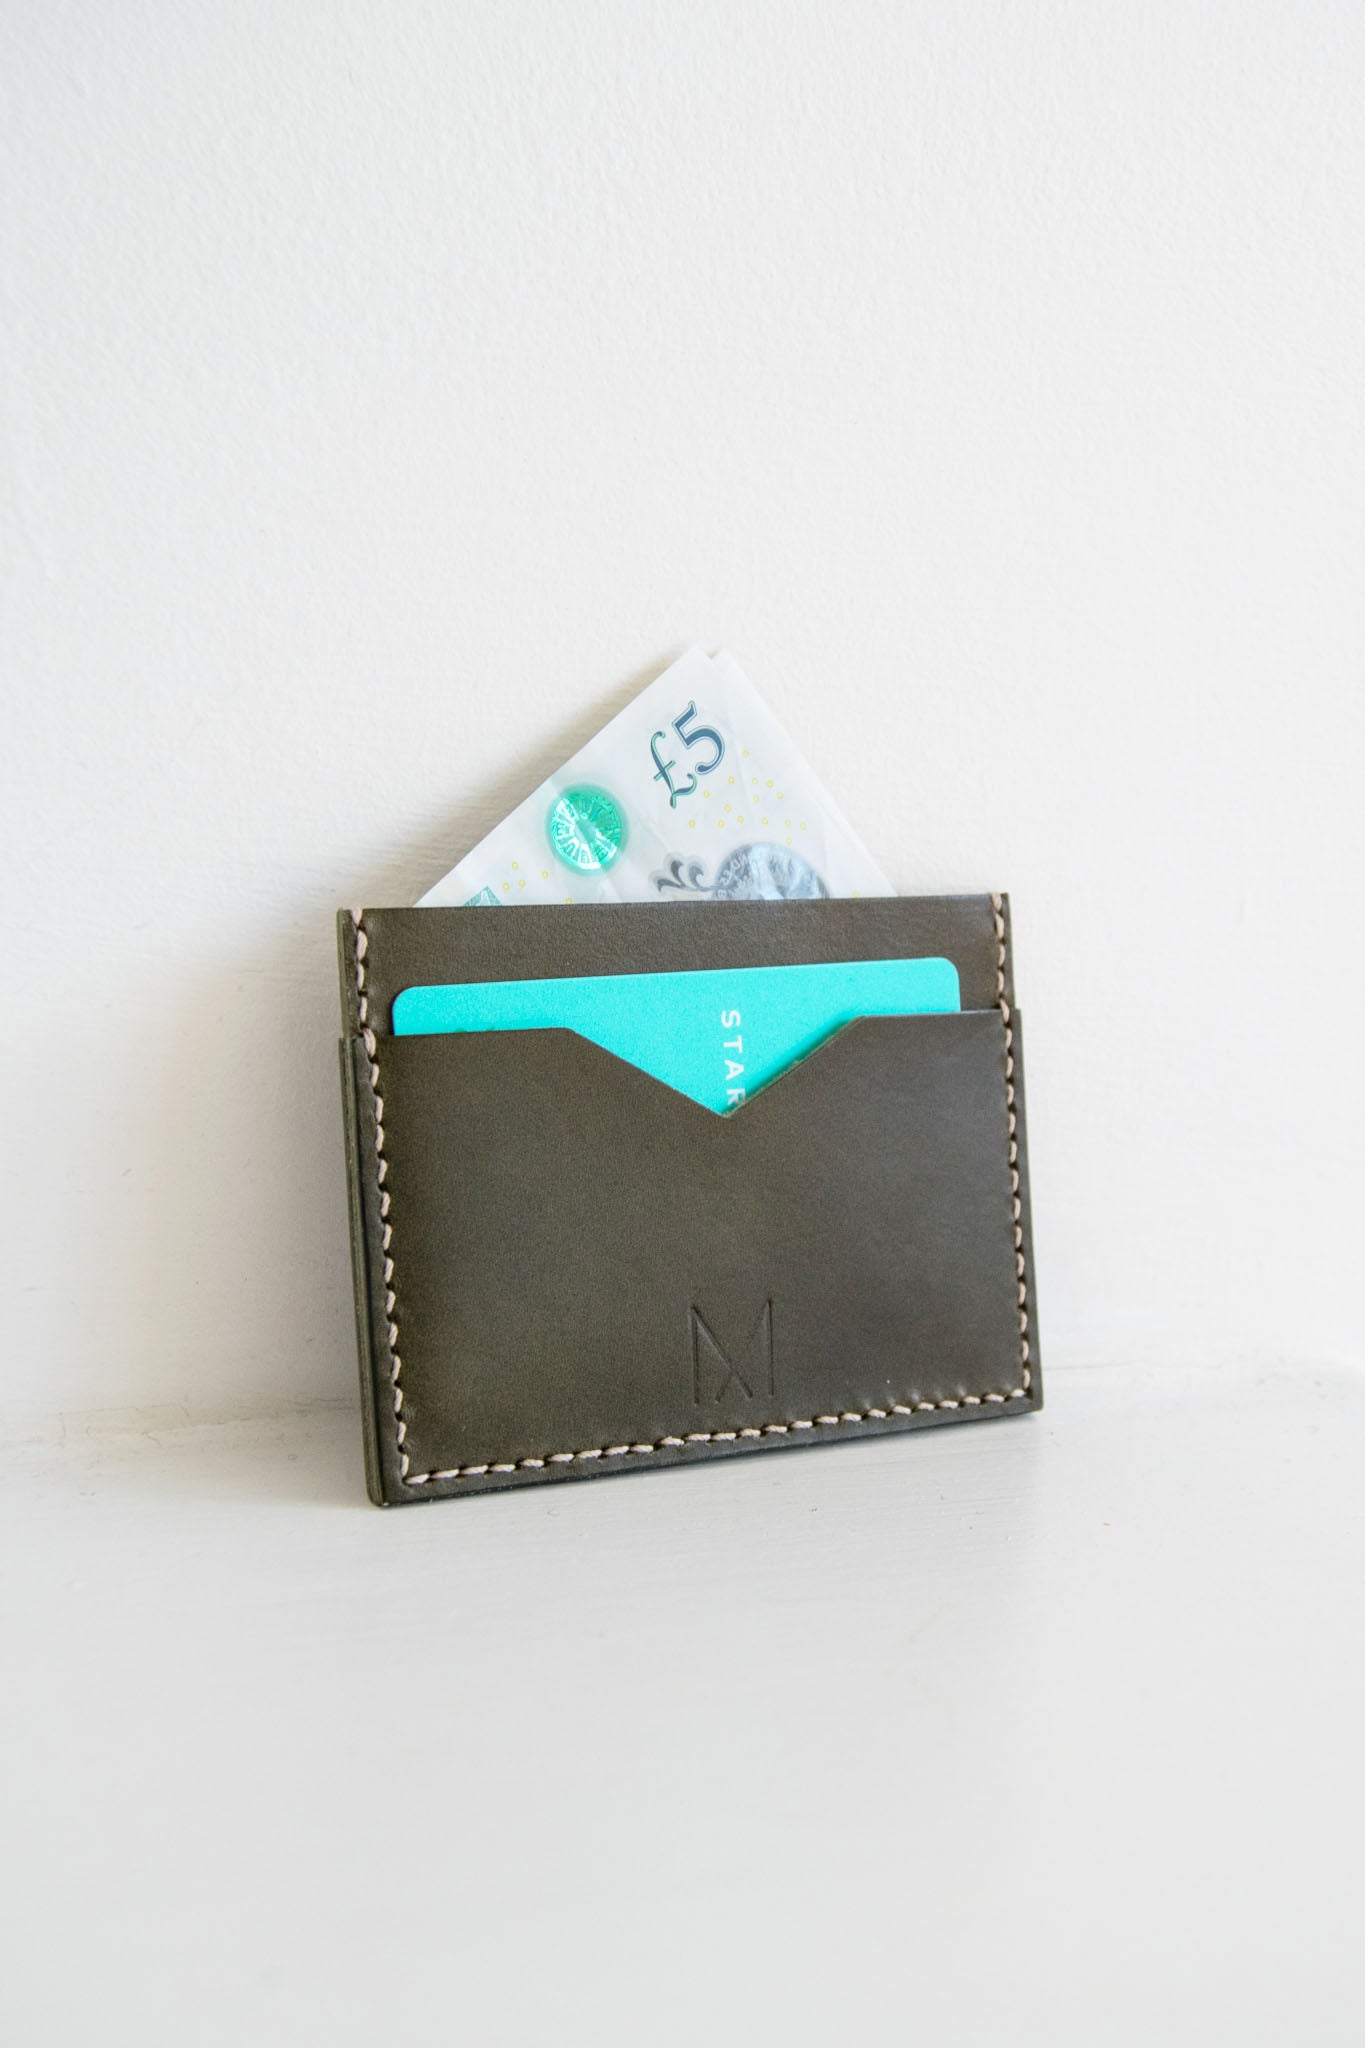 Slim Leather Card Holder in Olive Green